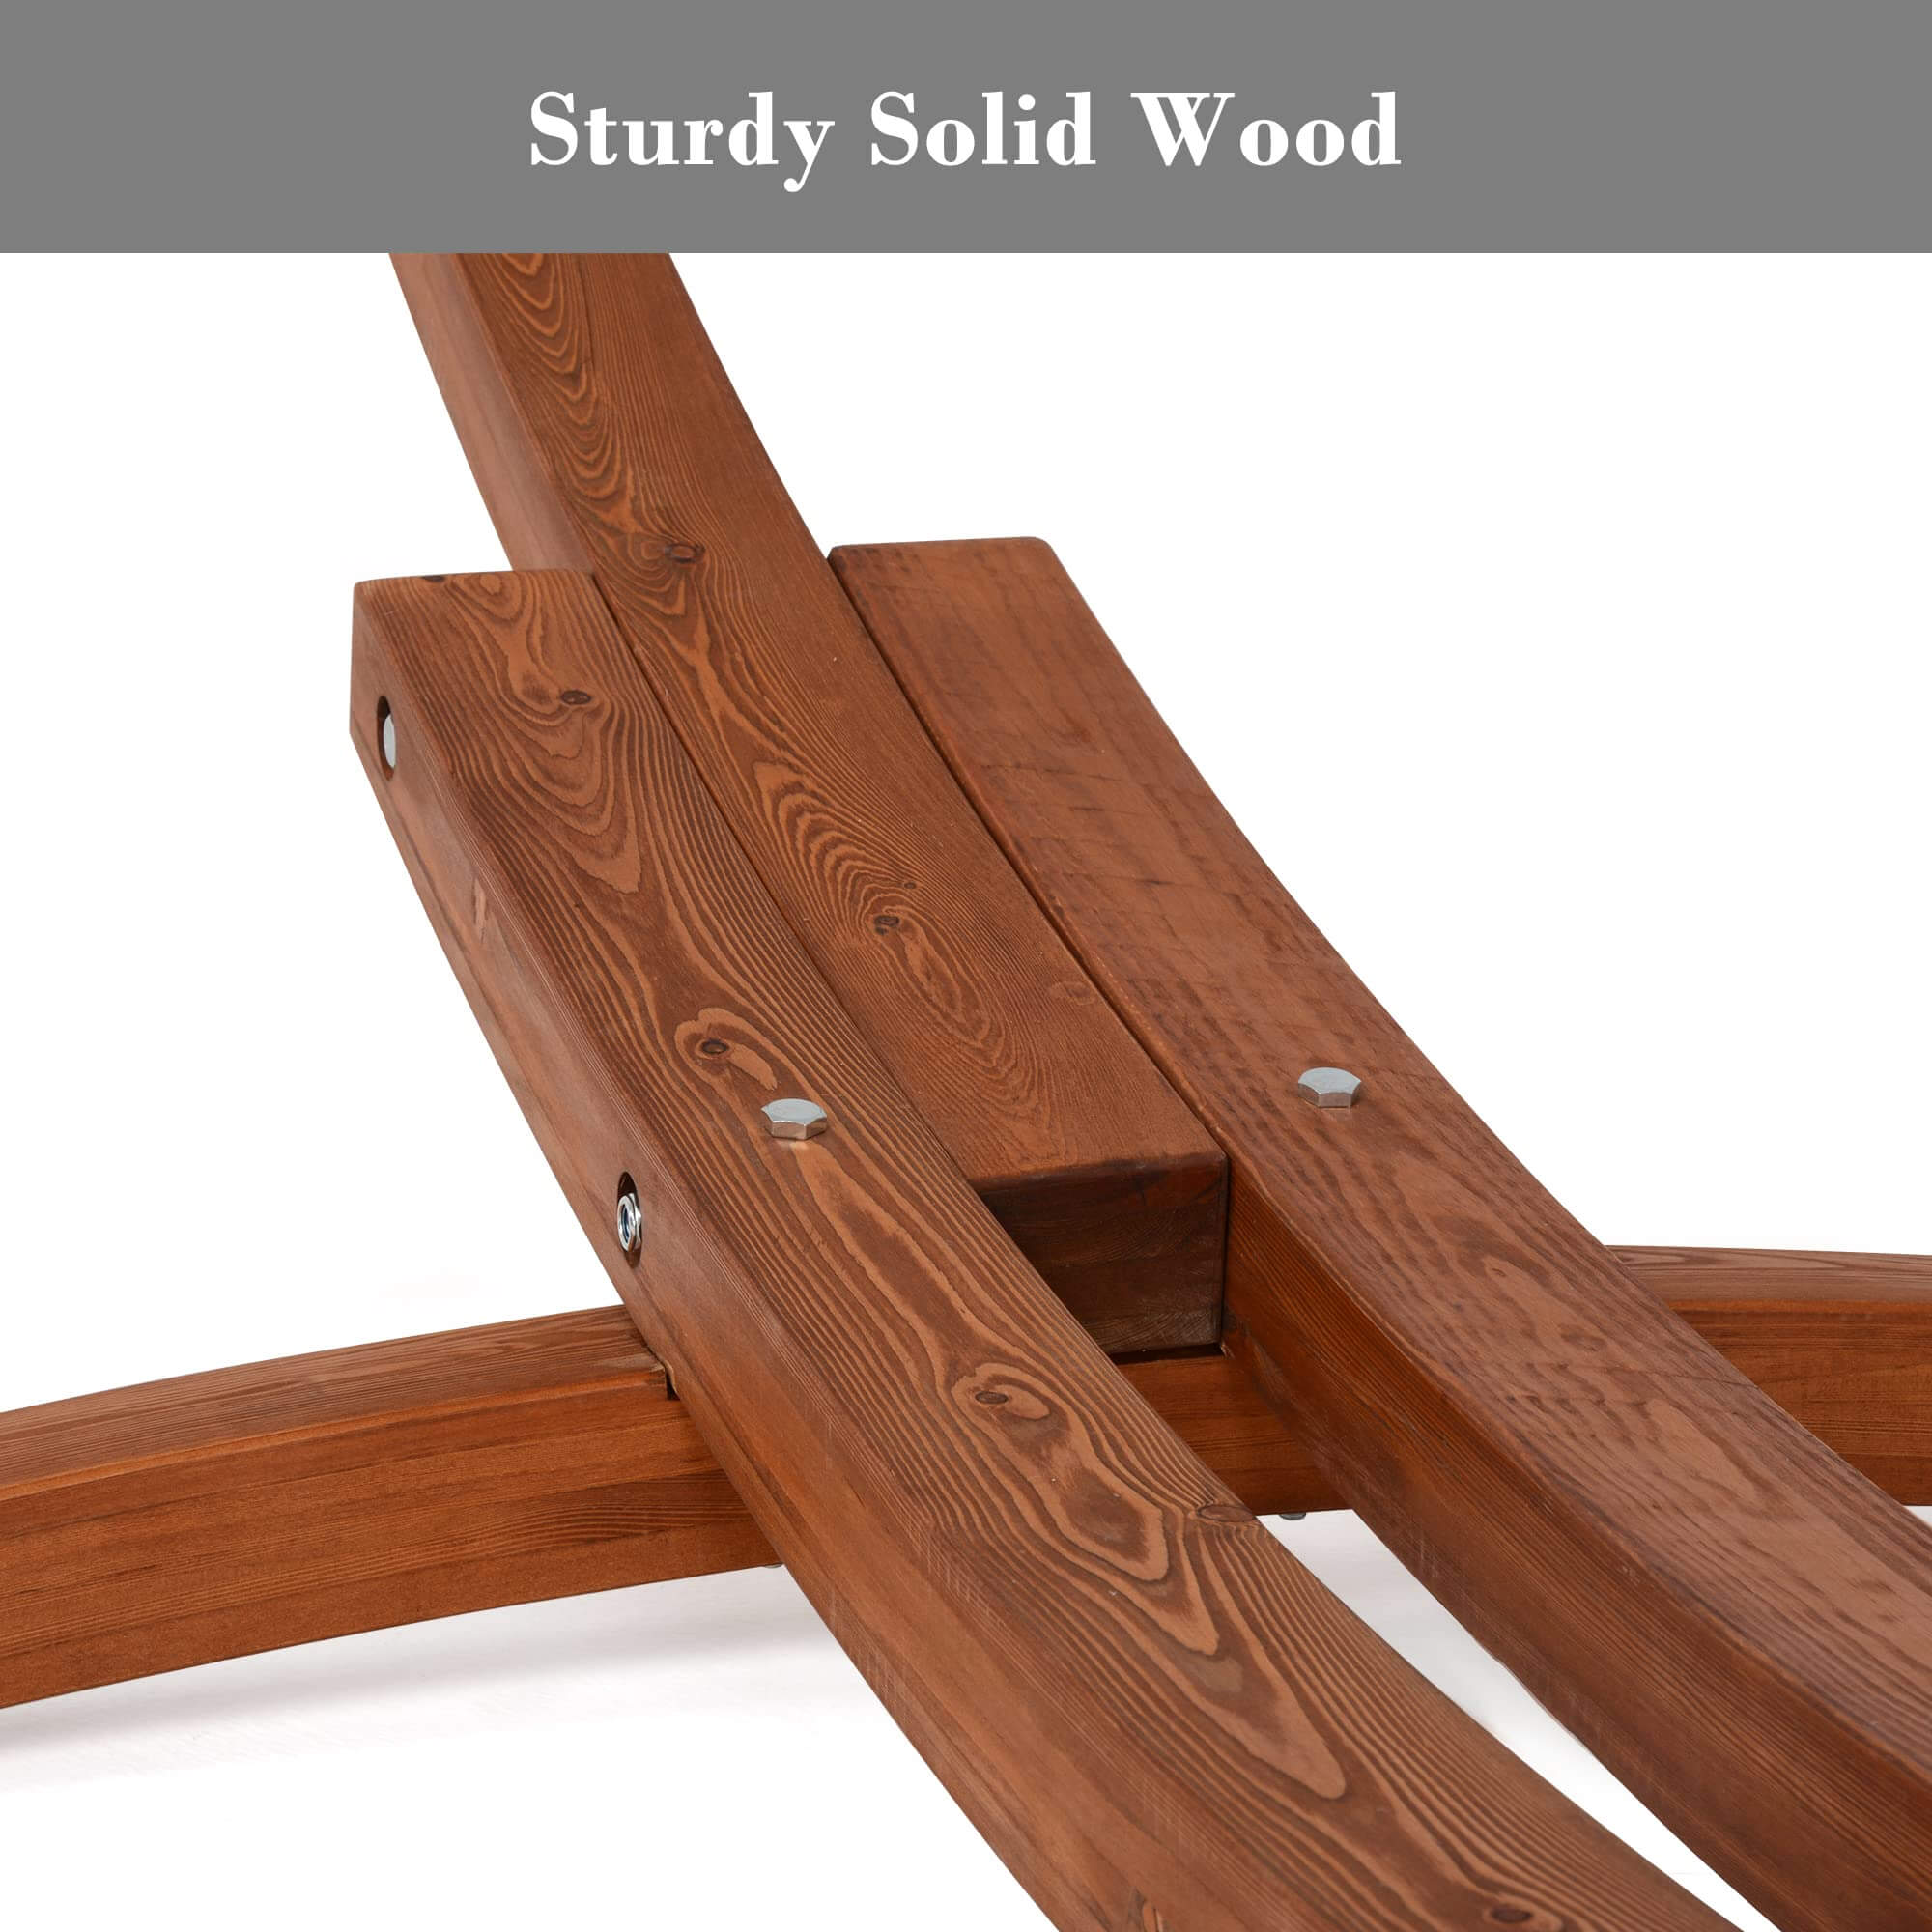 SUNCREAT wooden hammock stand#material_wooden